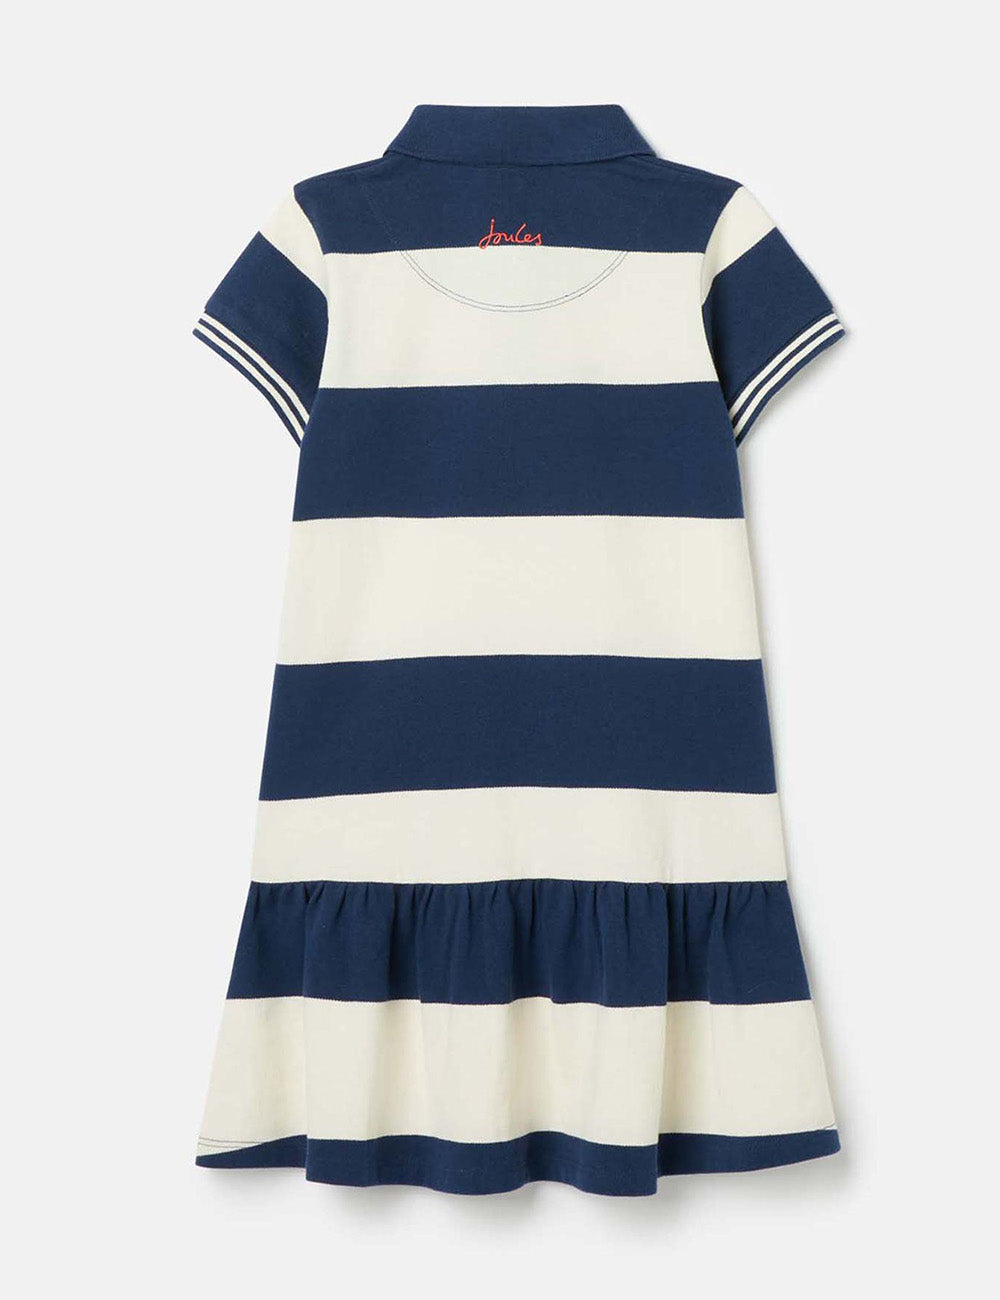 Joules Orla Polo Dress - Navy/Cream Stripe